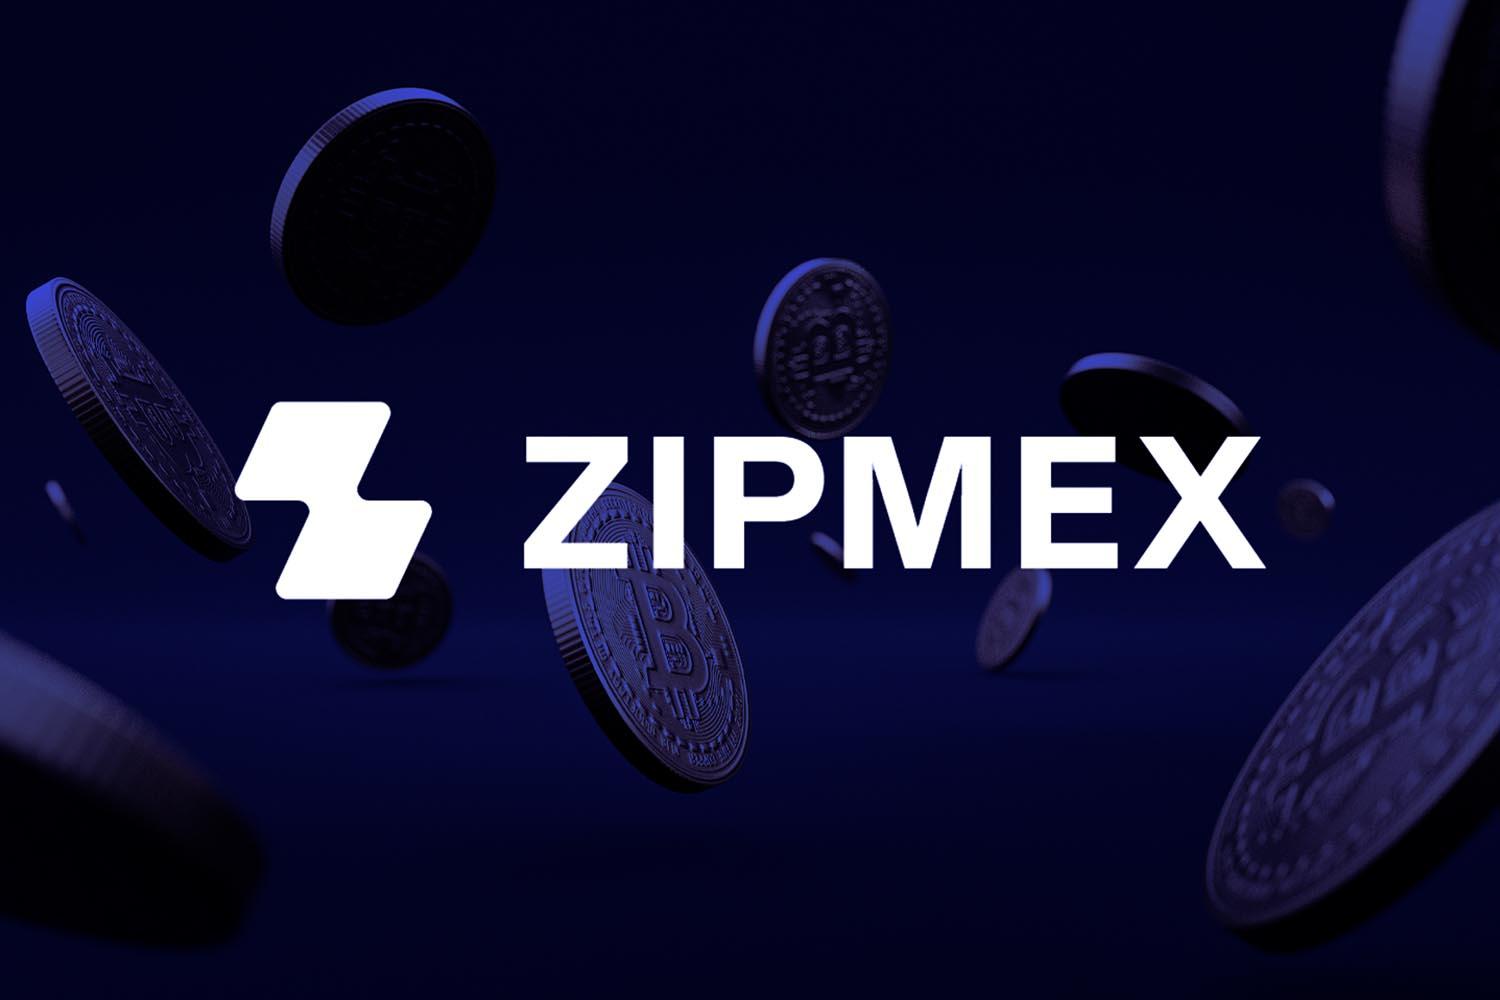 zipmex-marcus-ceo-trading-board-crypto-debt-restructuring-SPACEBAR-Hero.jpg